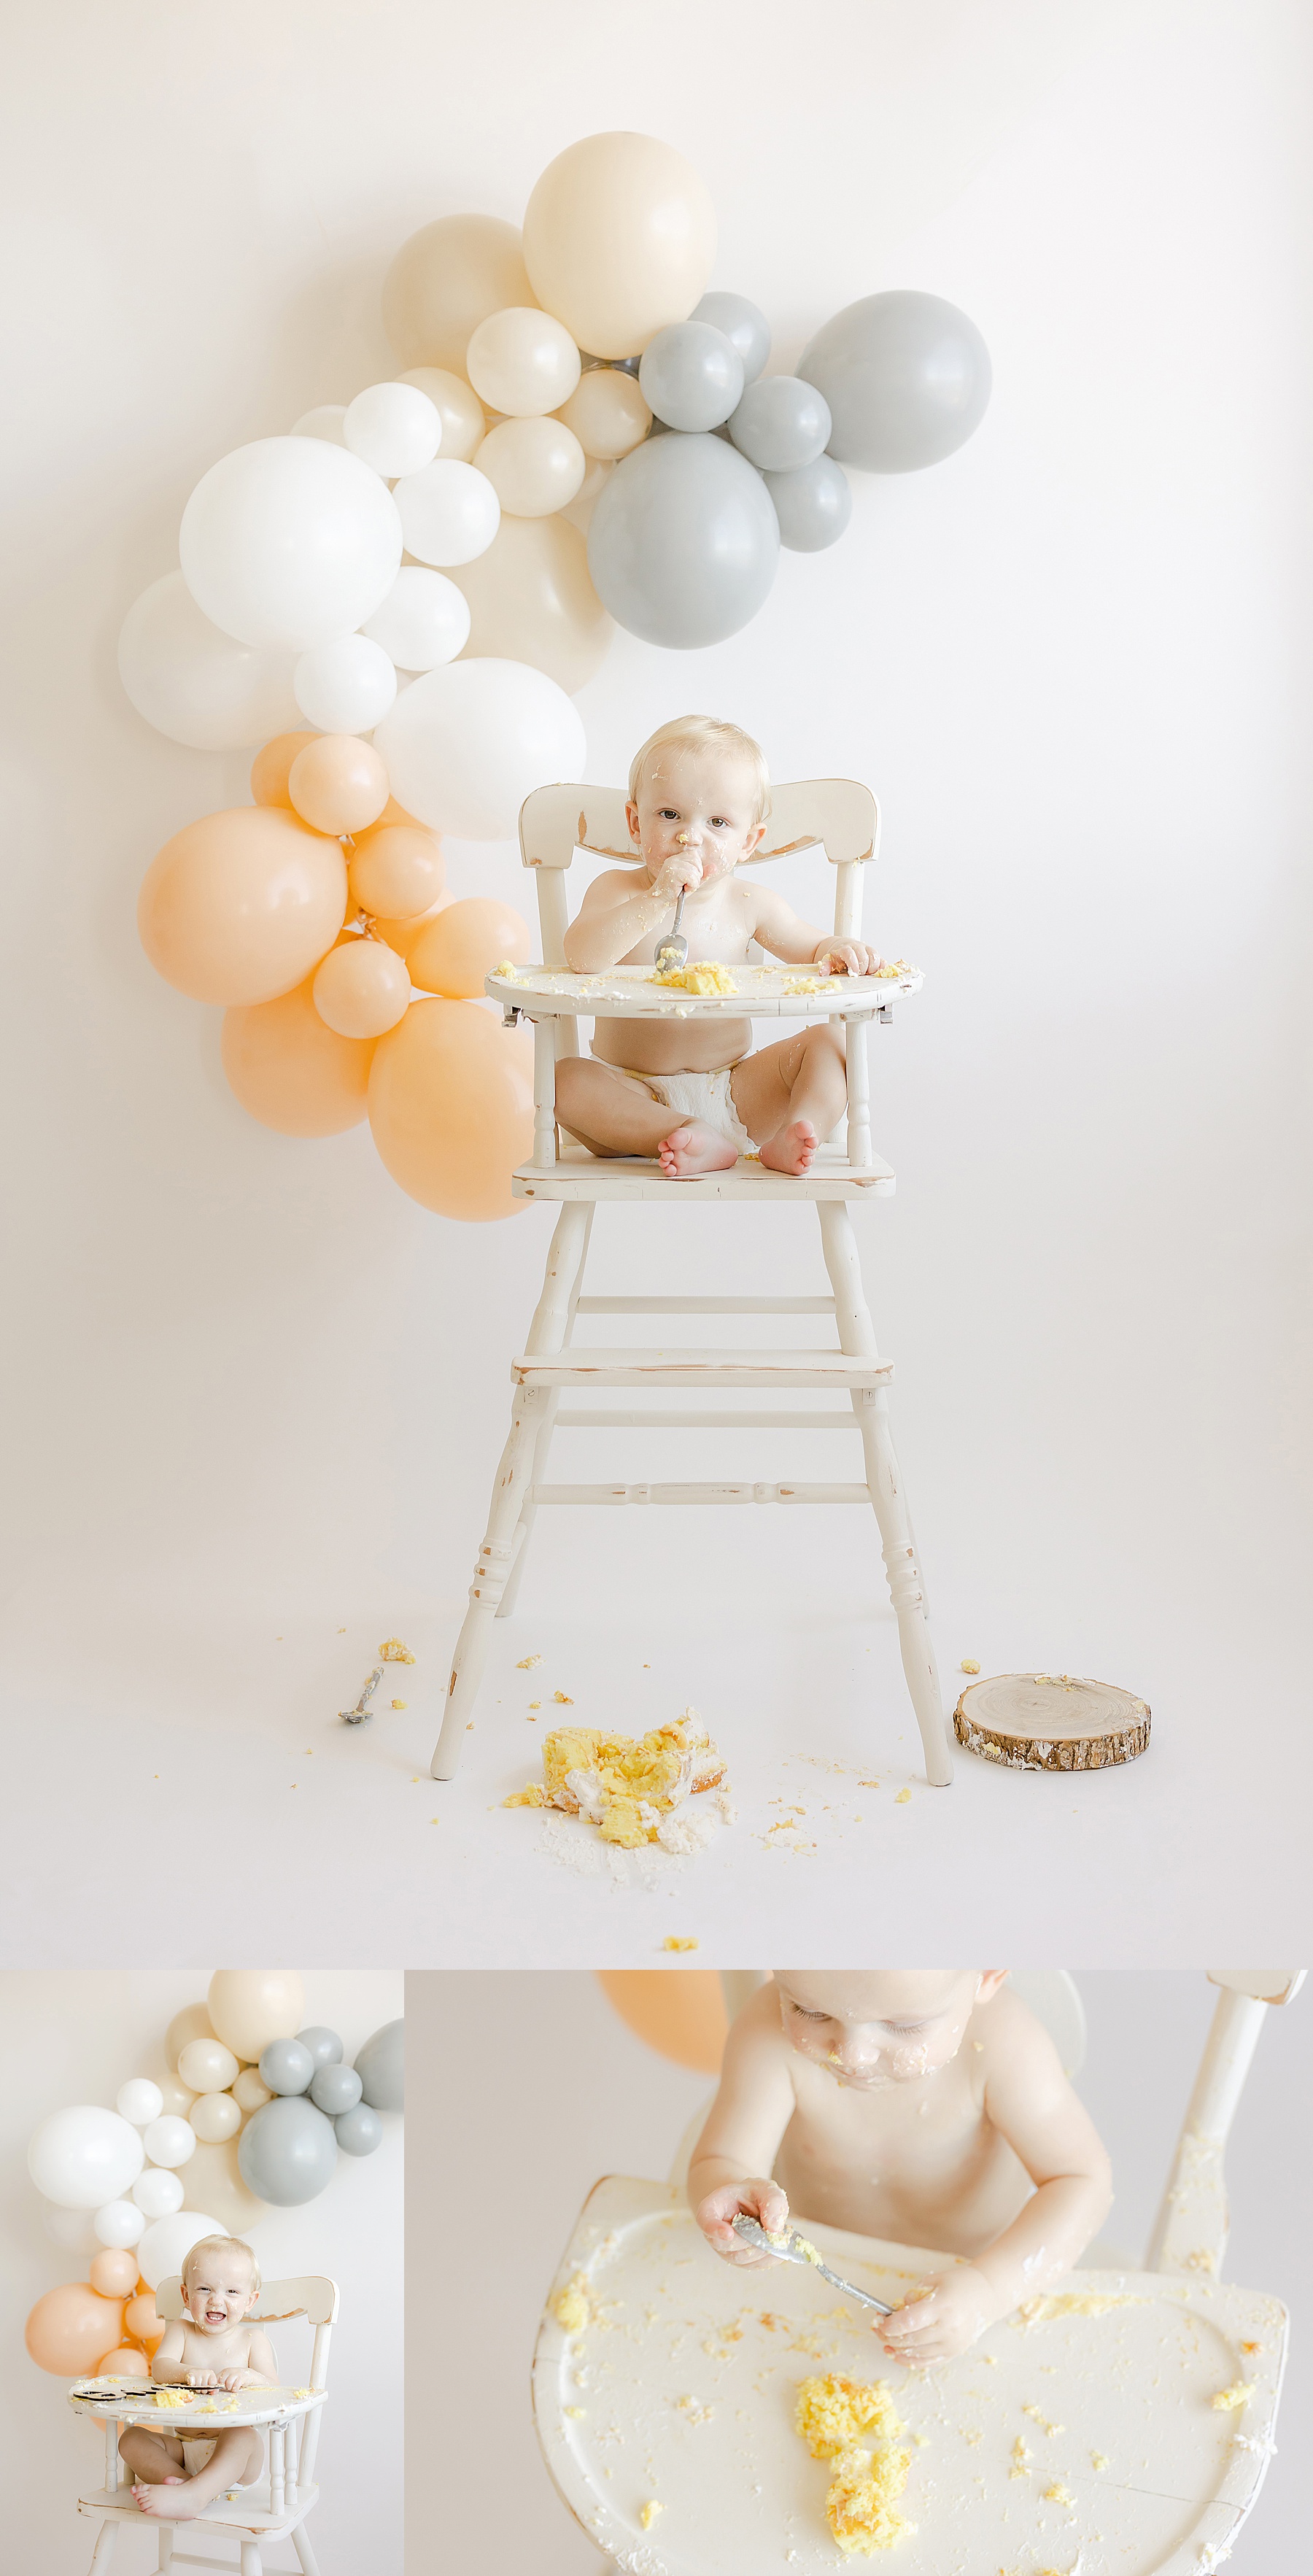 baby boy smashing yellow cake in white high chair for first birthday cake smash